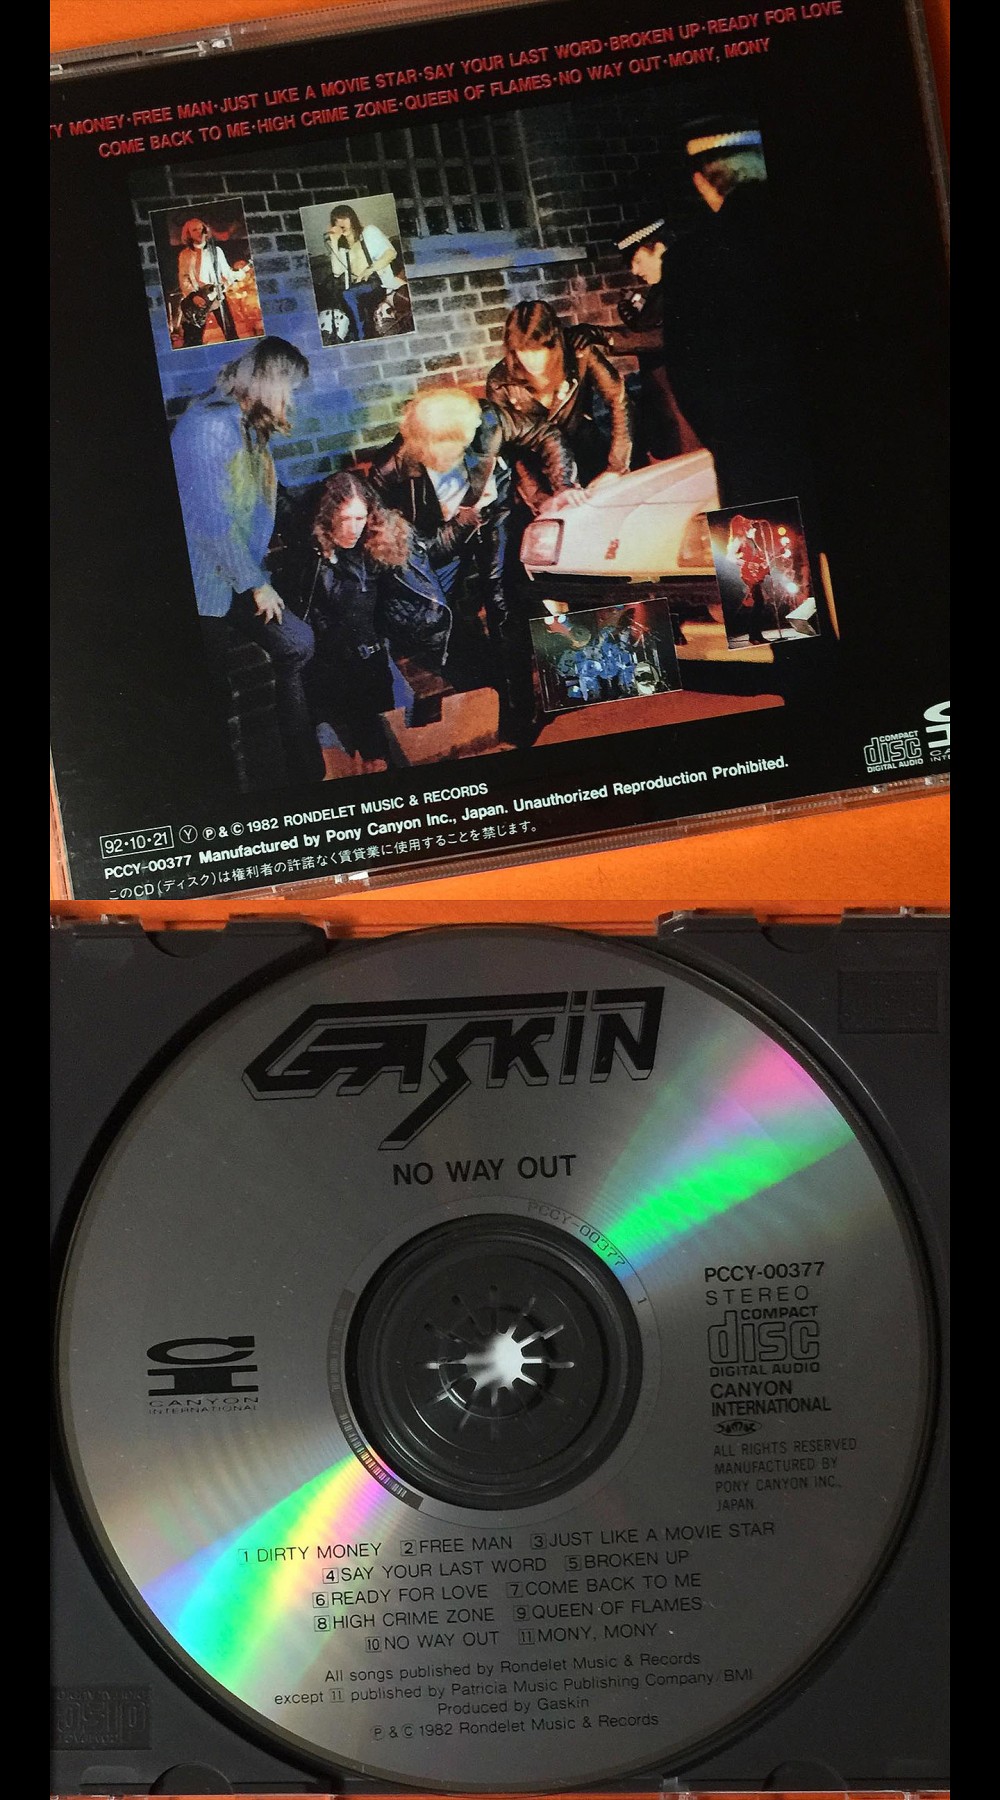 Gaskin - No Way Out CD Photo